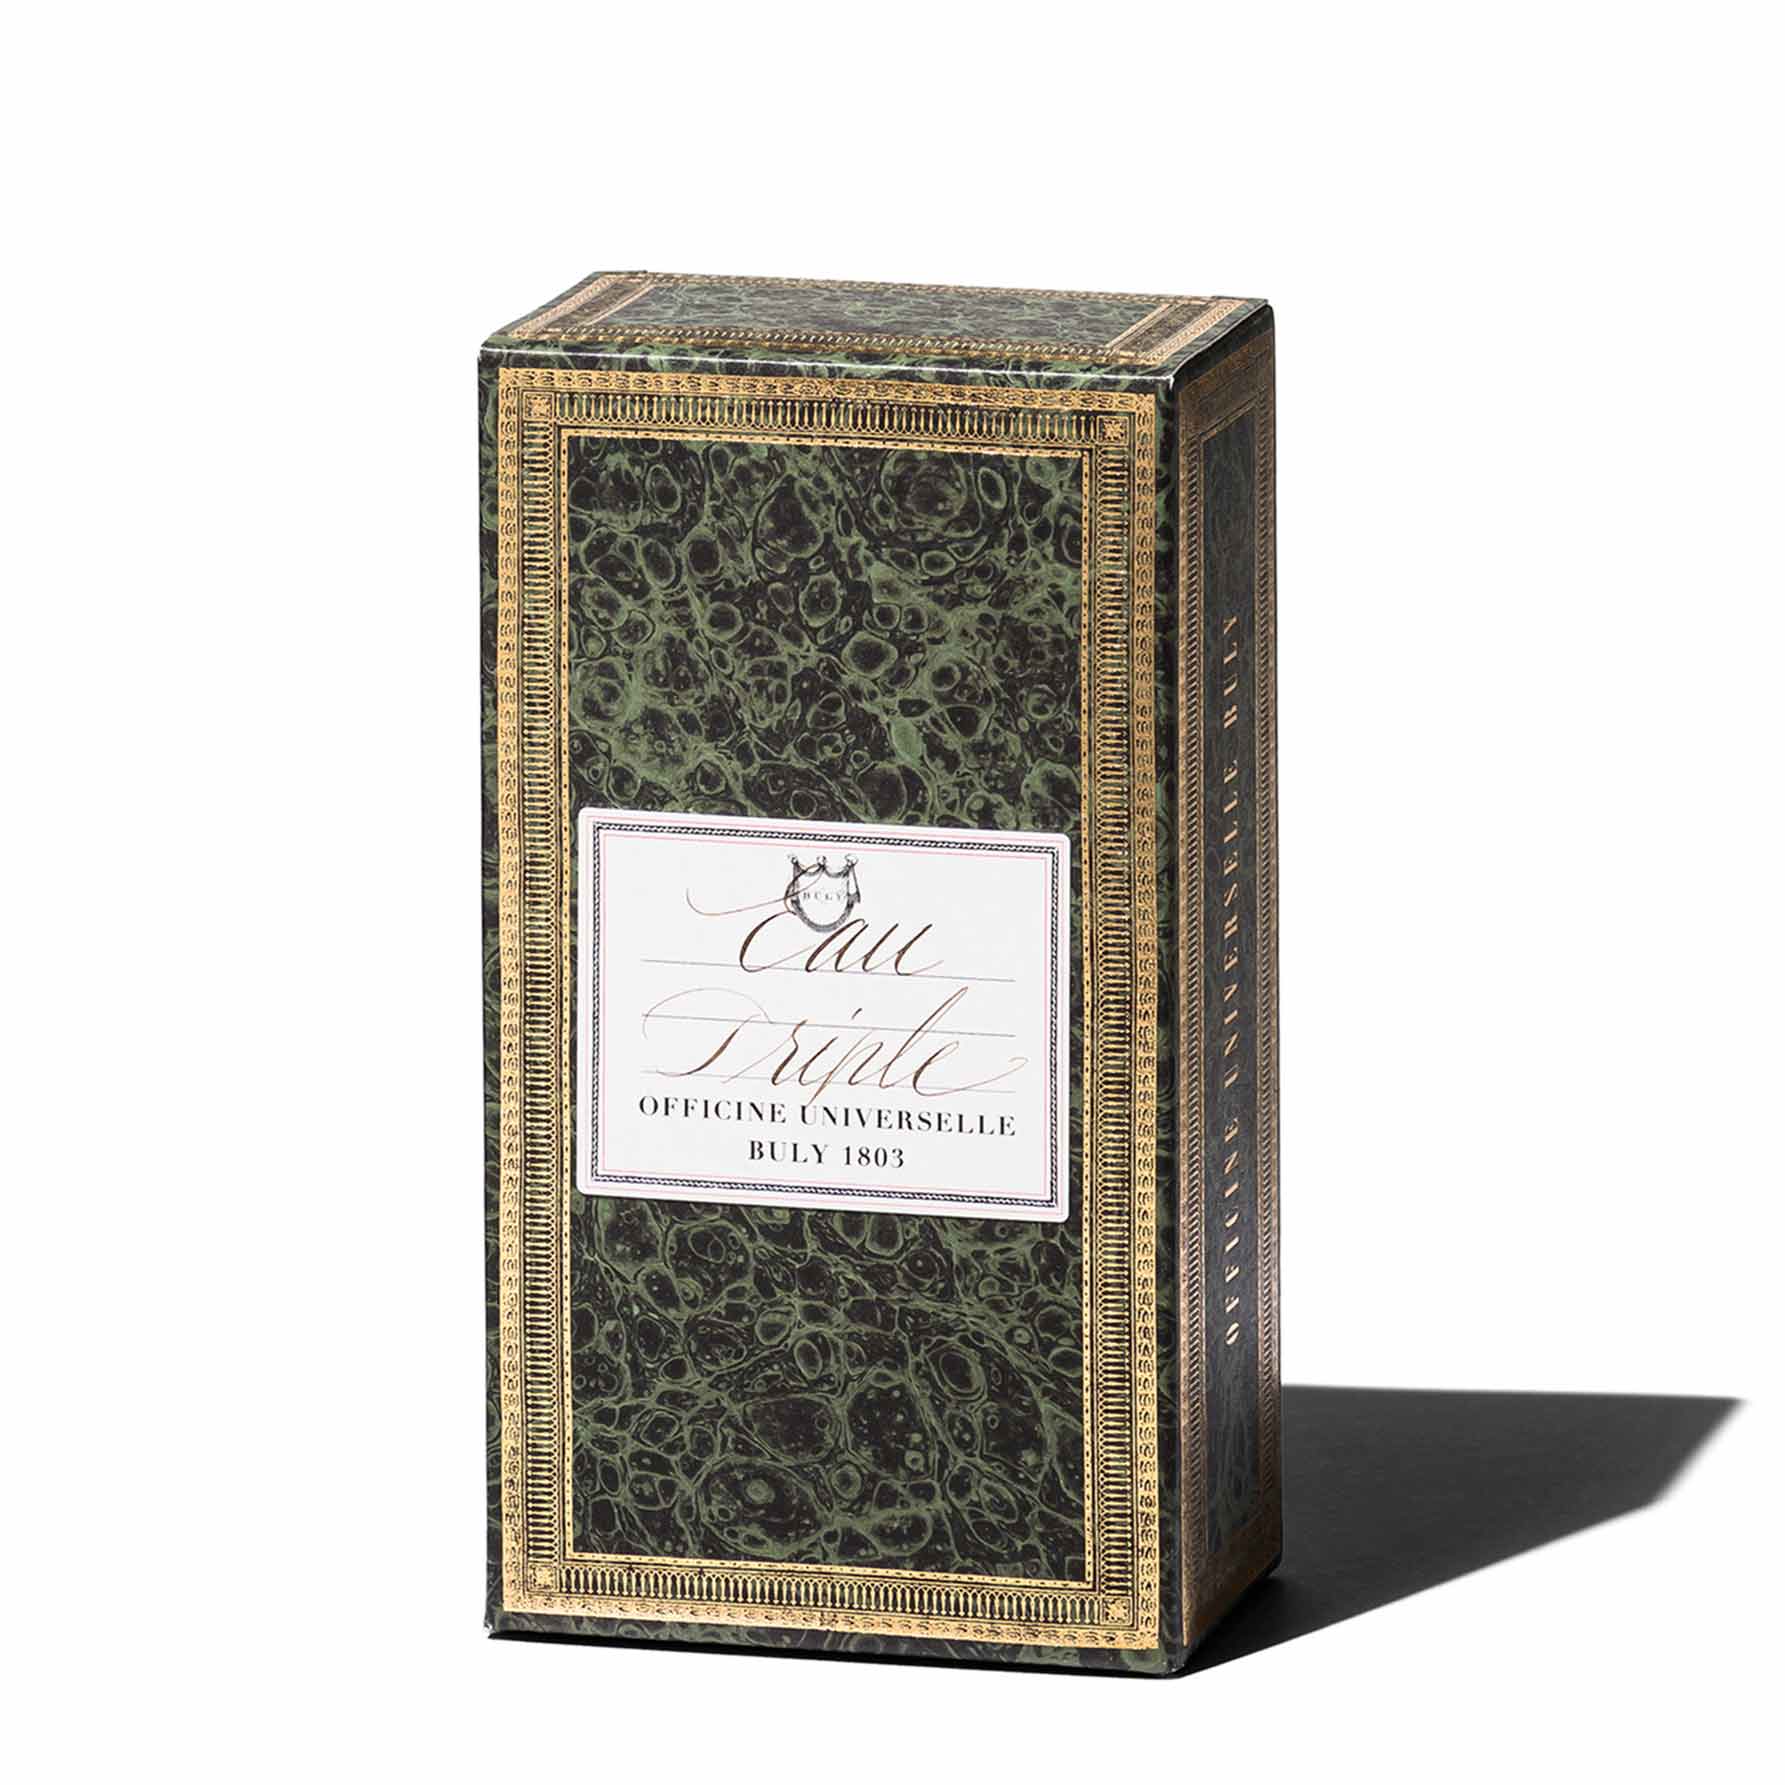 Officine Universelle Buly Savon Supefin Foret De Komi Perfume Soap